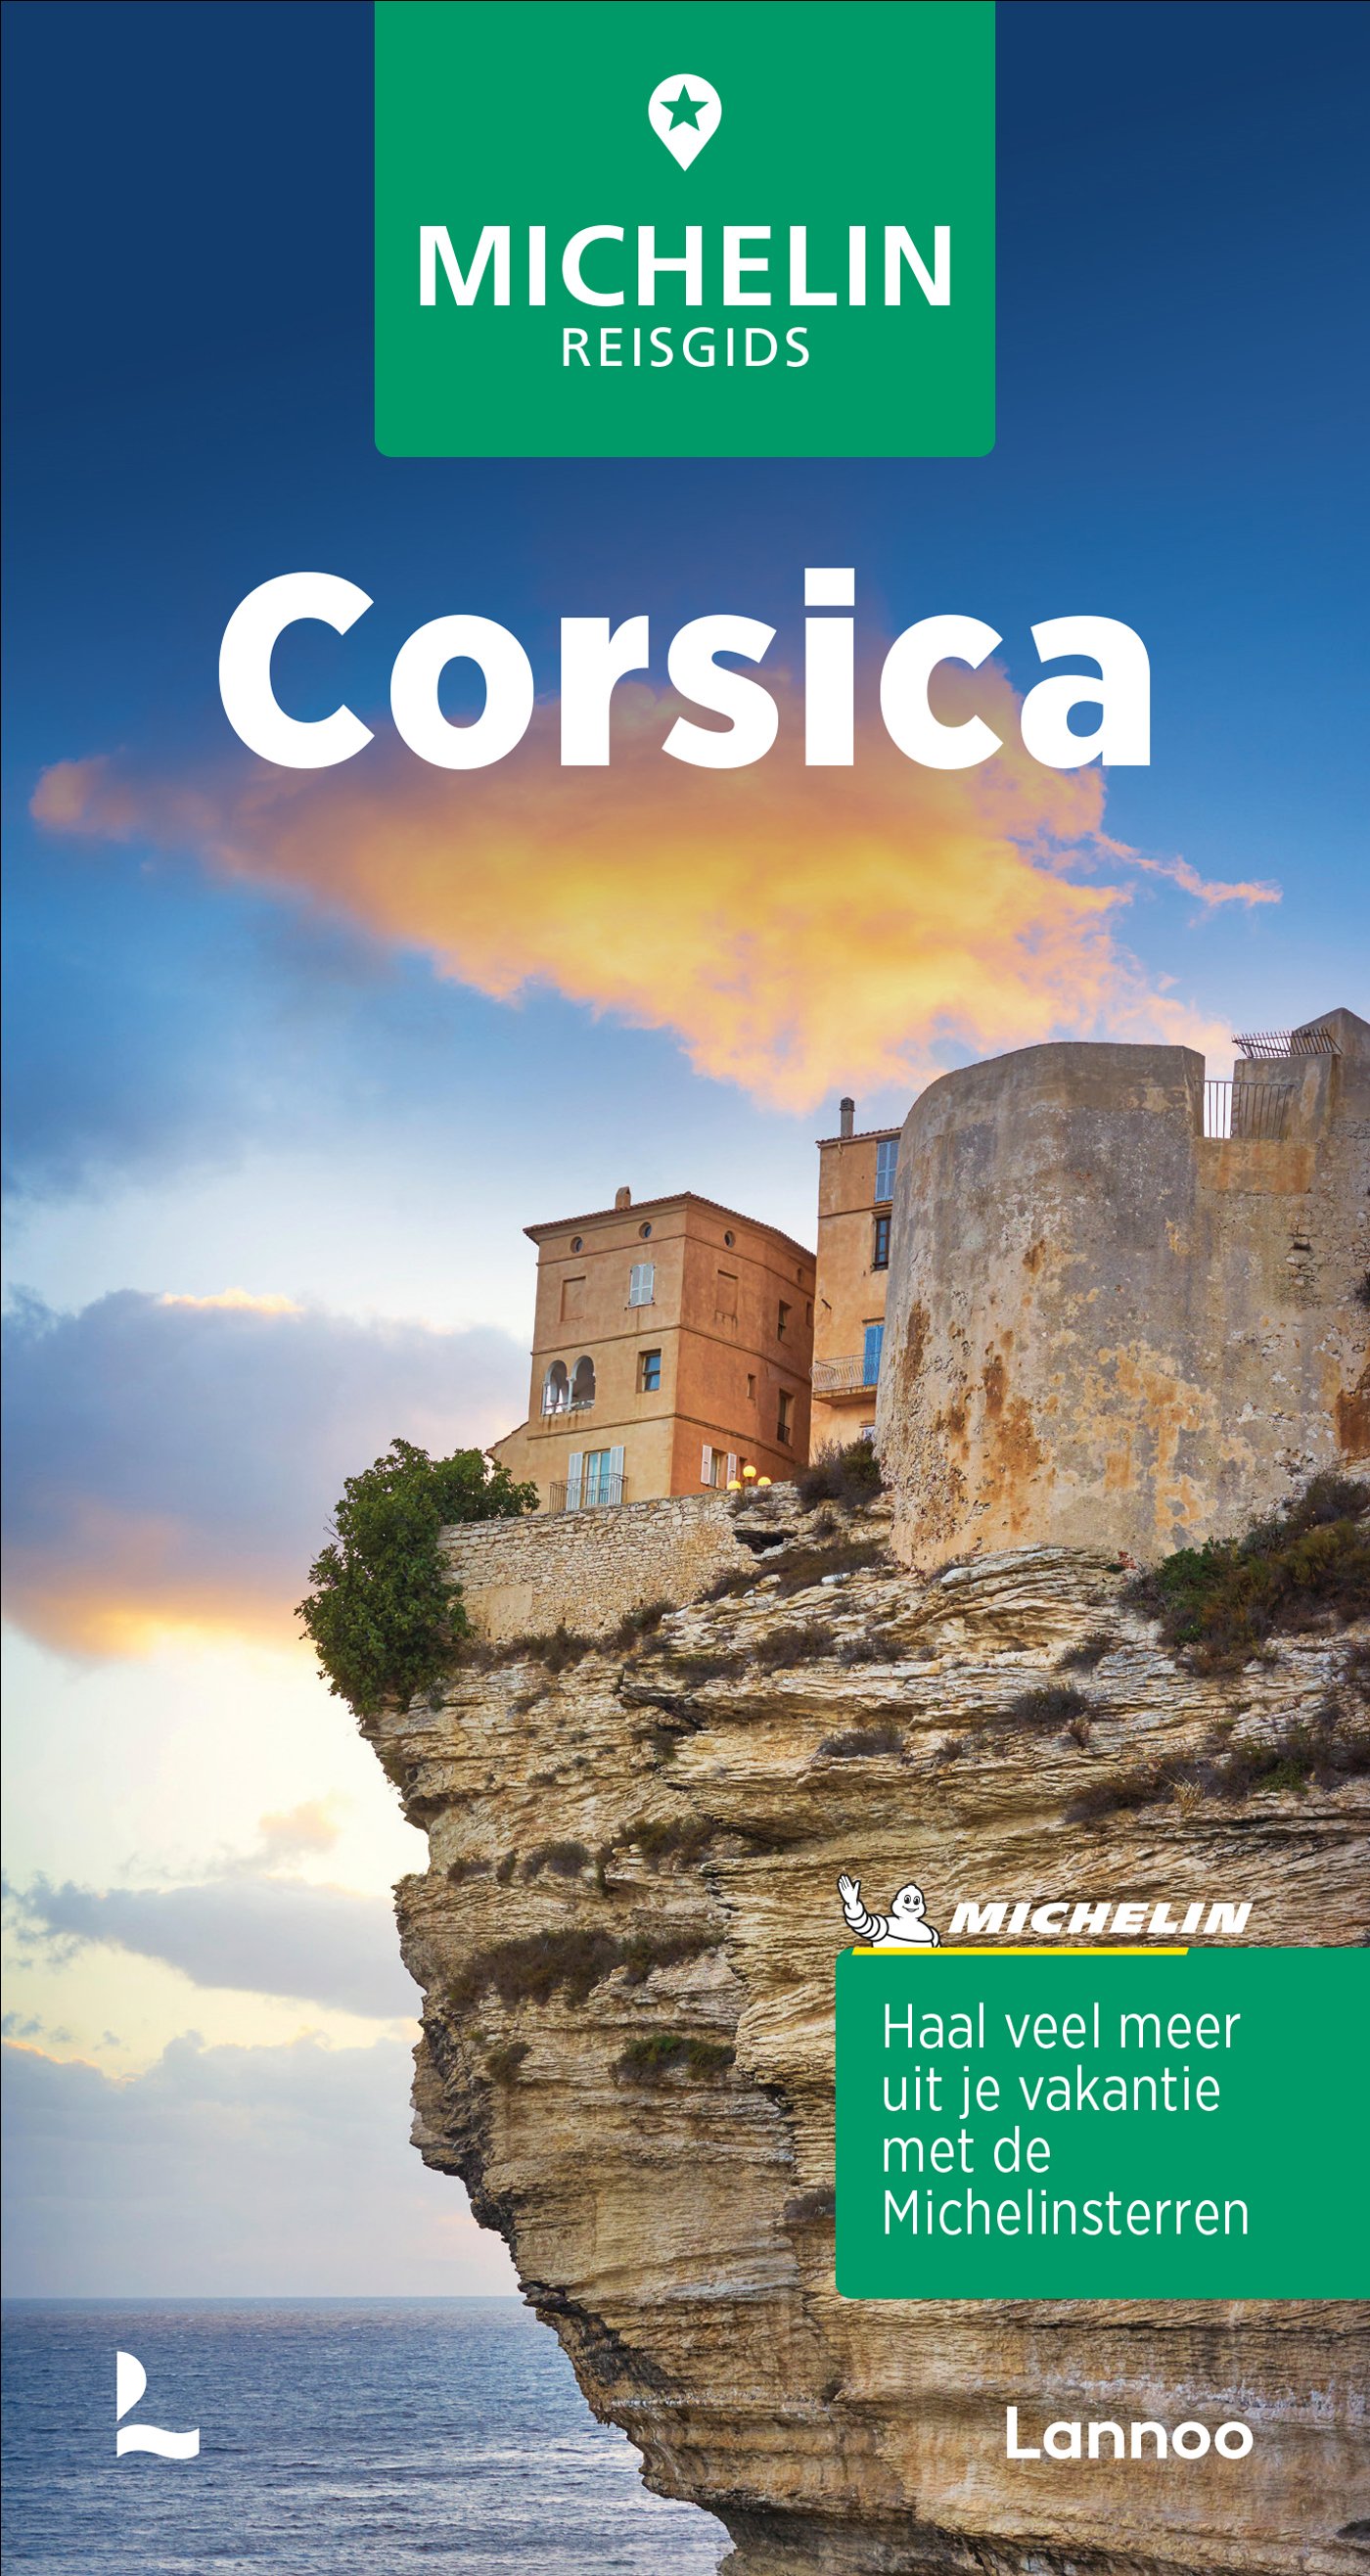 Online bestellen: Reisgids Michelin groene gids Corsica | Lannoo